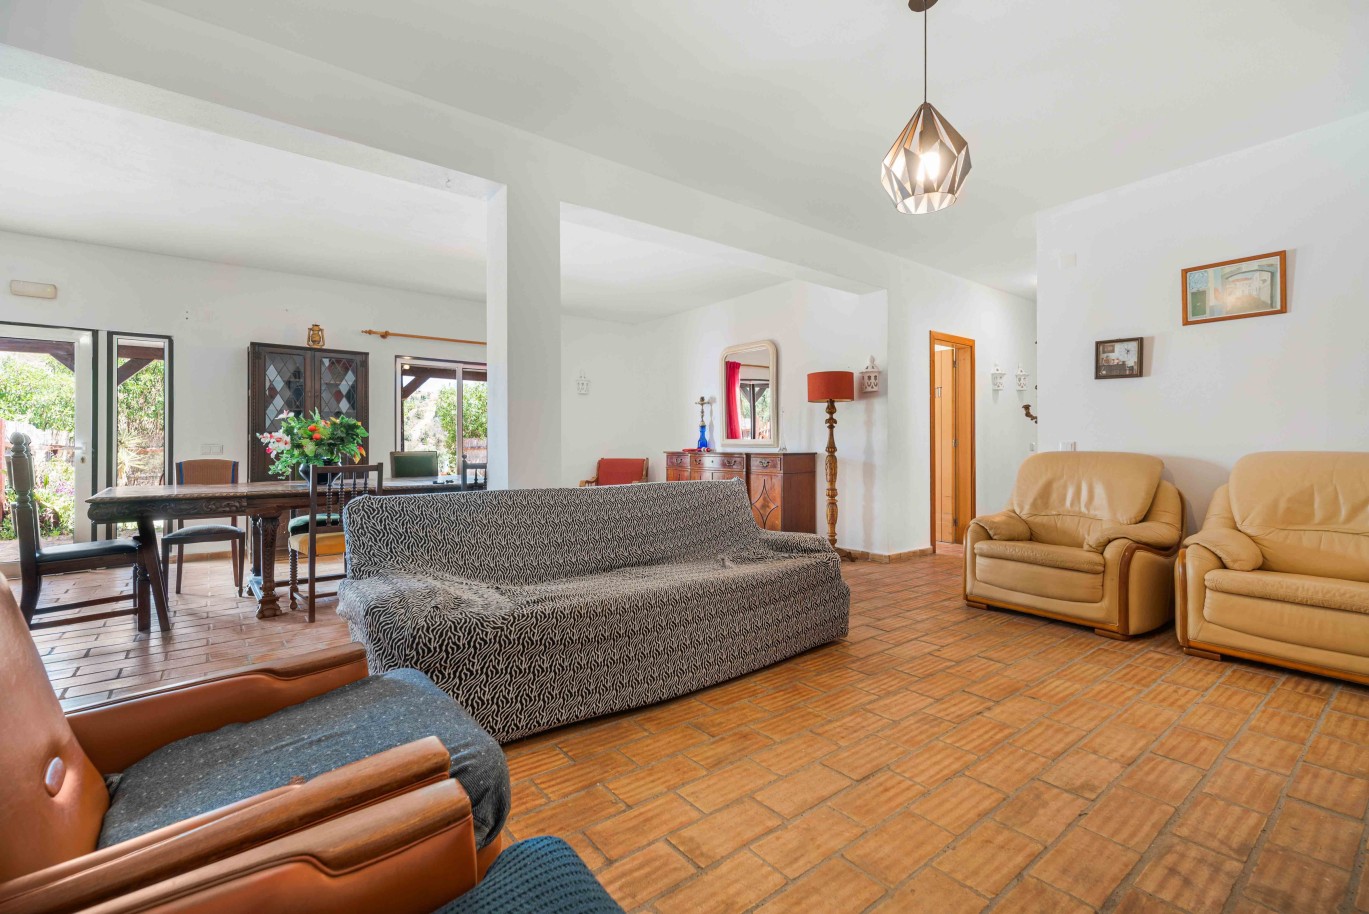 9 bedroom villa for sale in Pereira, Algarve_231595